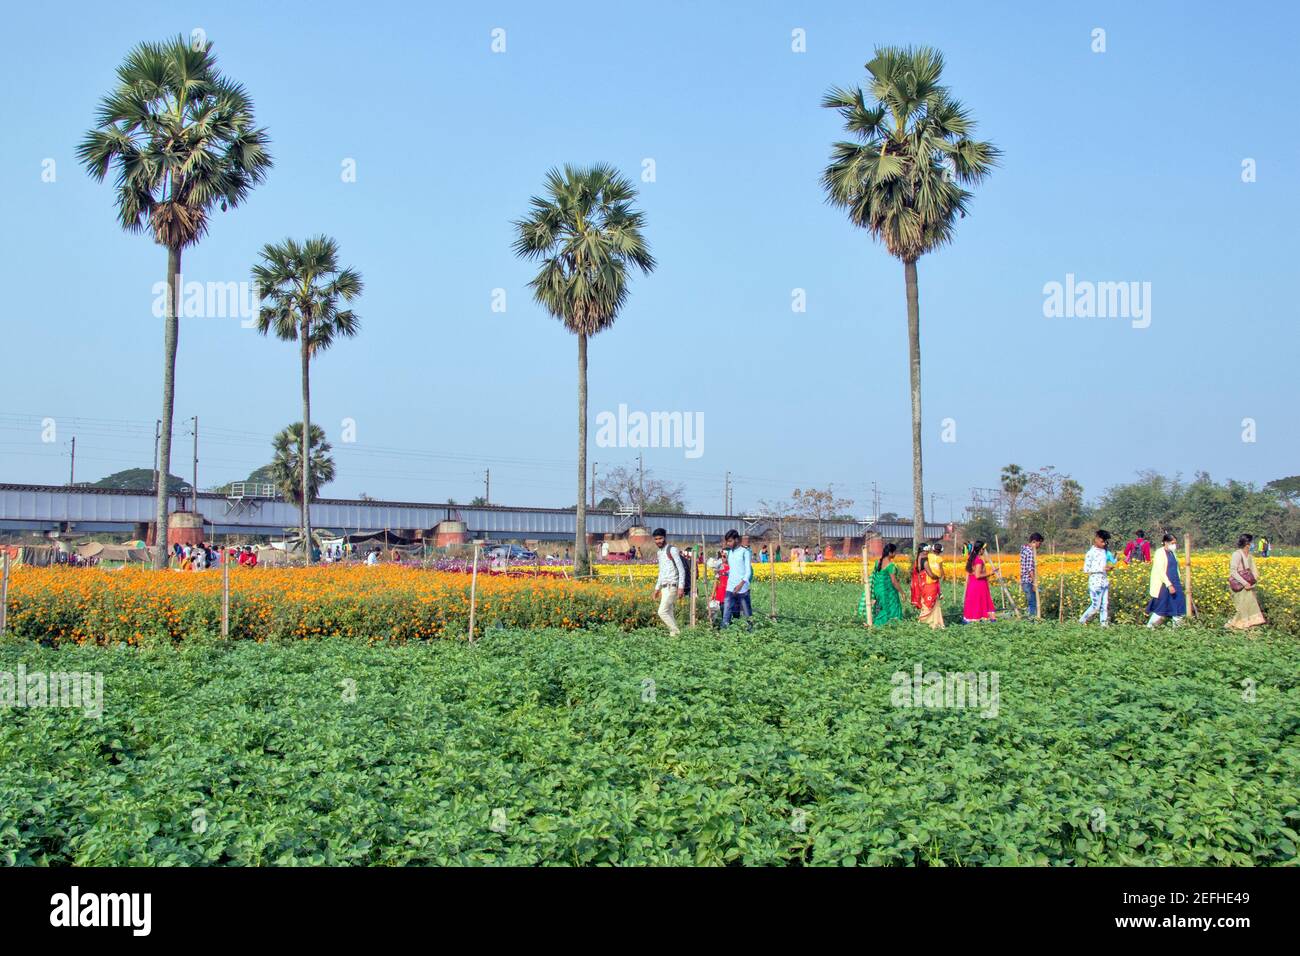 Blumenlandschaft und Besucher in mediinipore West bengal indien Stockfoto